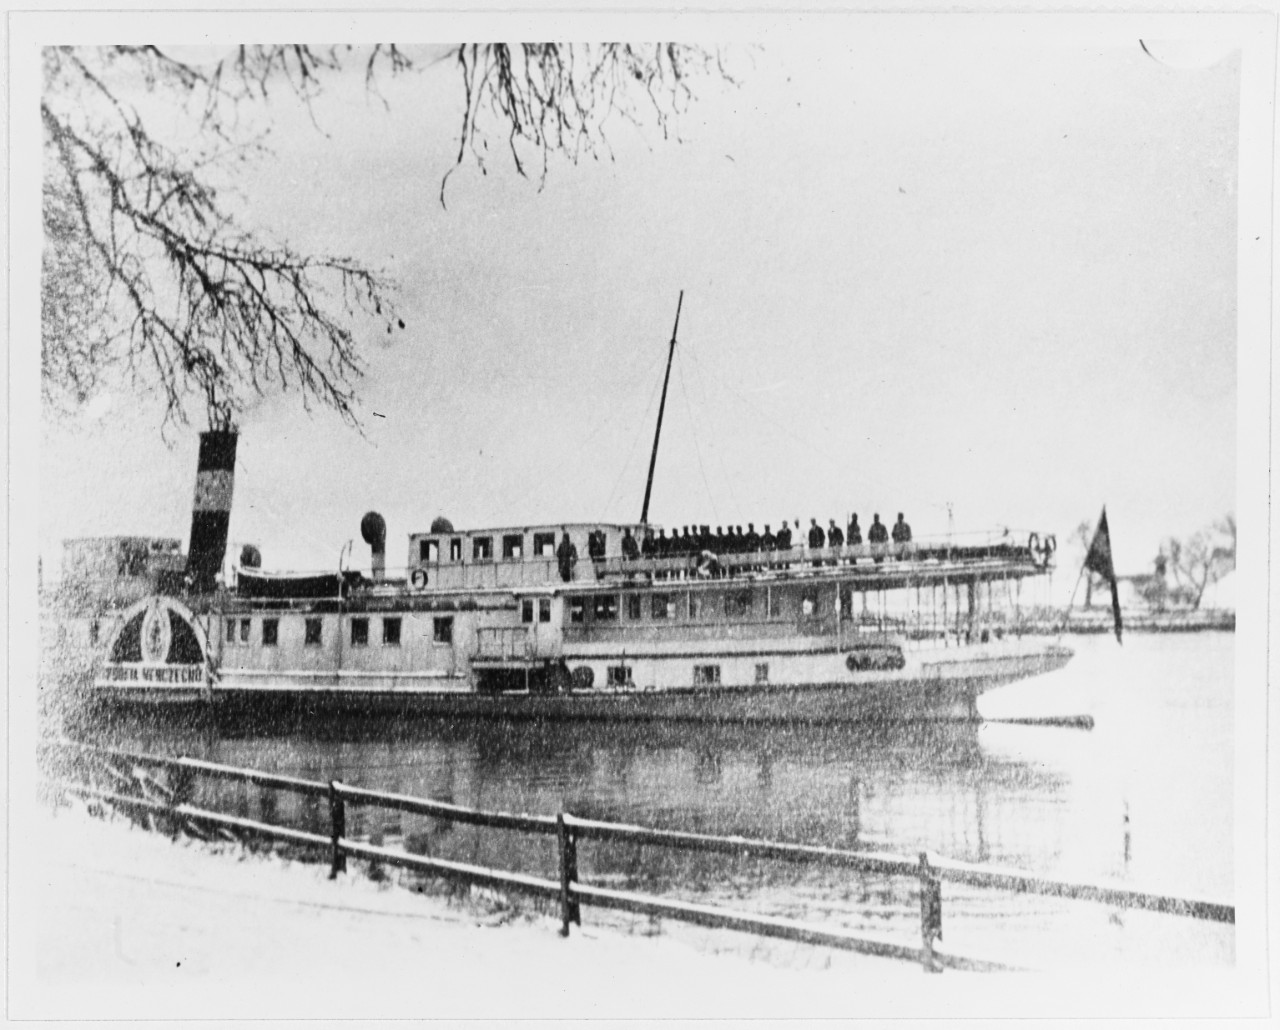 ZSOFIA HERCZECNO (Austrian River Steamer, 1914)